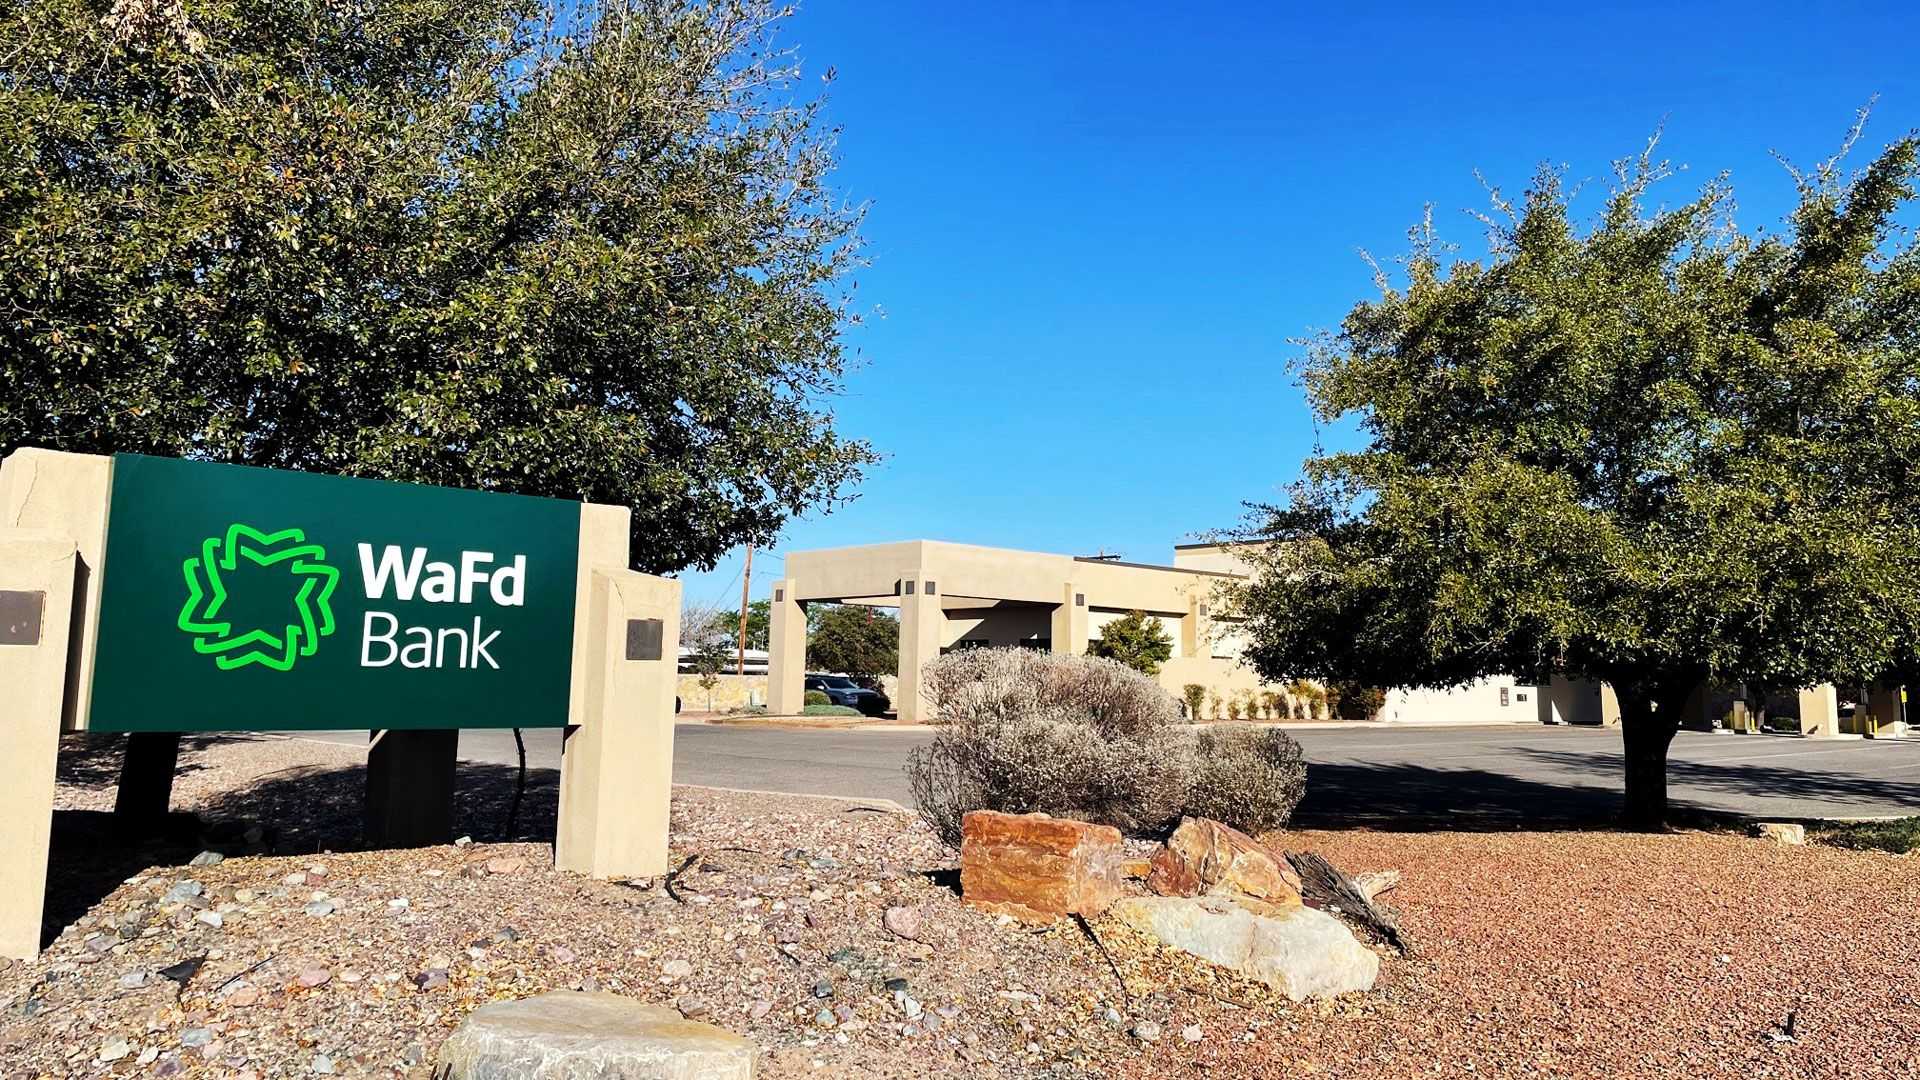 WaFd Bank in Las Cruces, NewMexico #1184 - Washington Federal.